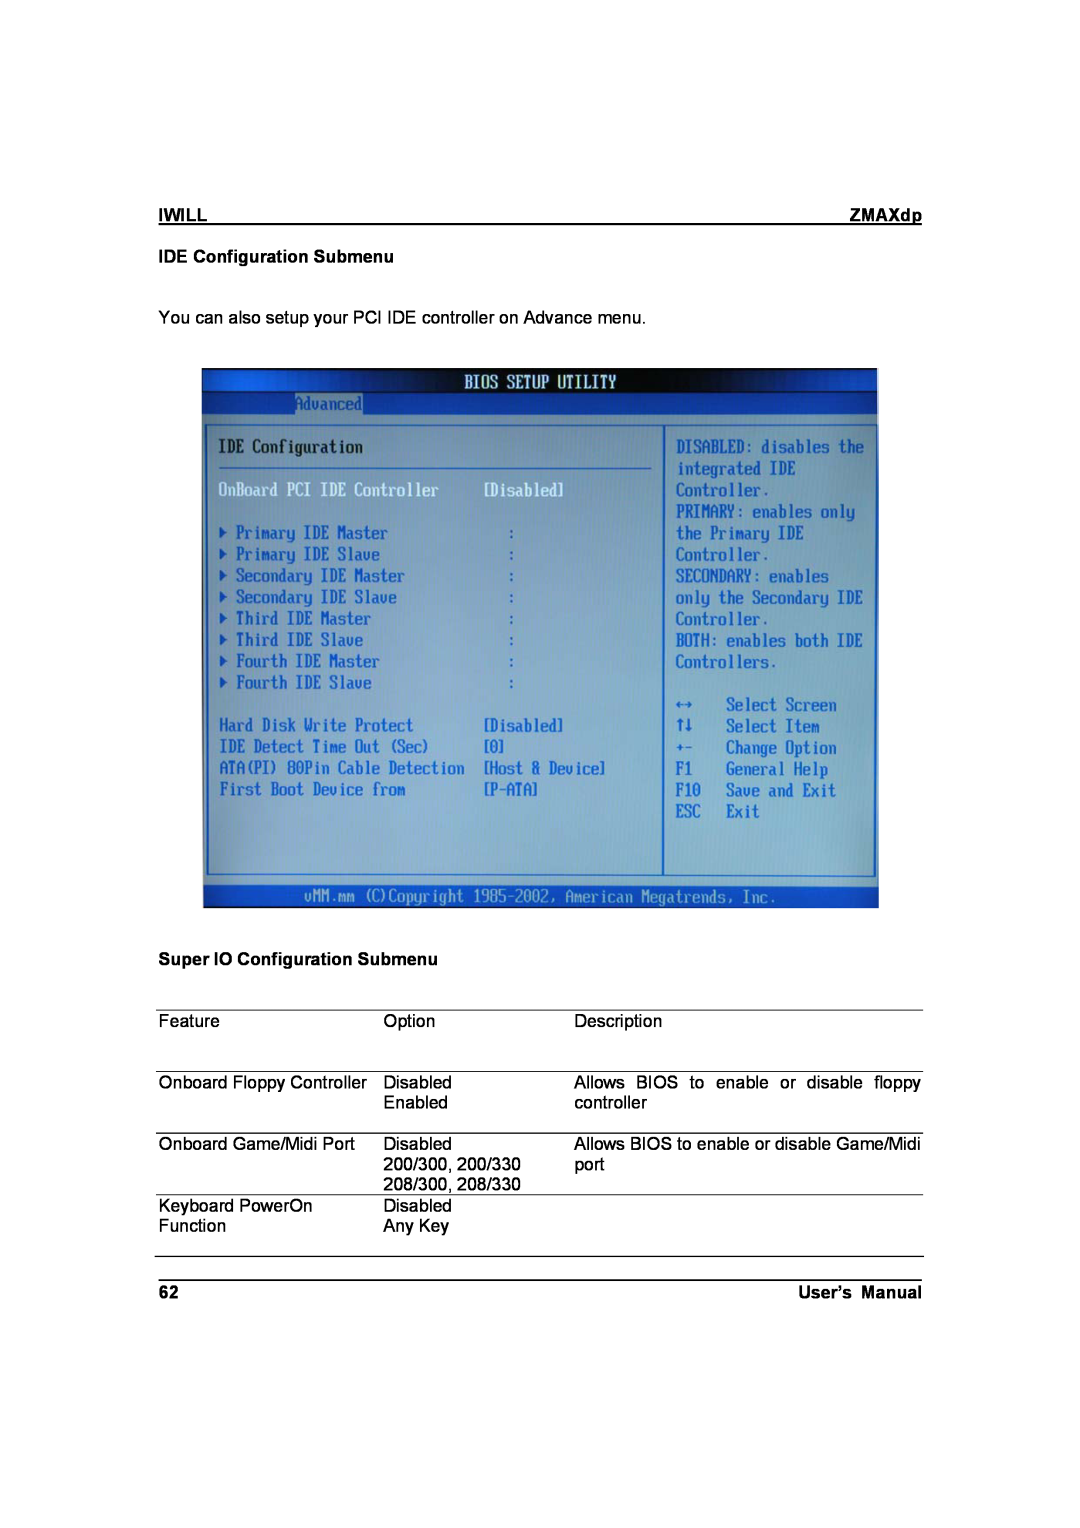 IBM ZMAXdp user manual Iwill, IDE Configuration Submenu, Super IO Configuration Submenu, User’s Manual 